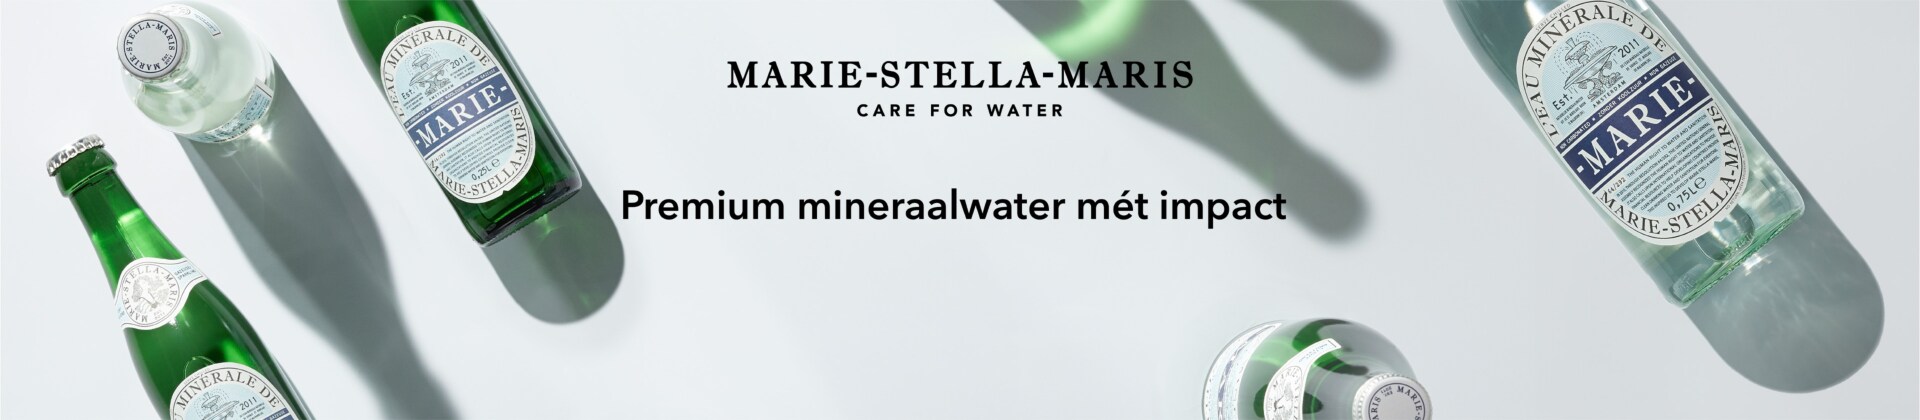 Marie Stella Maris